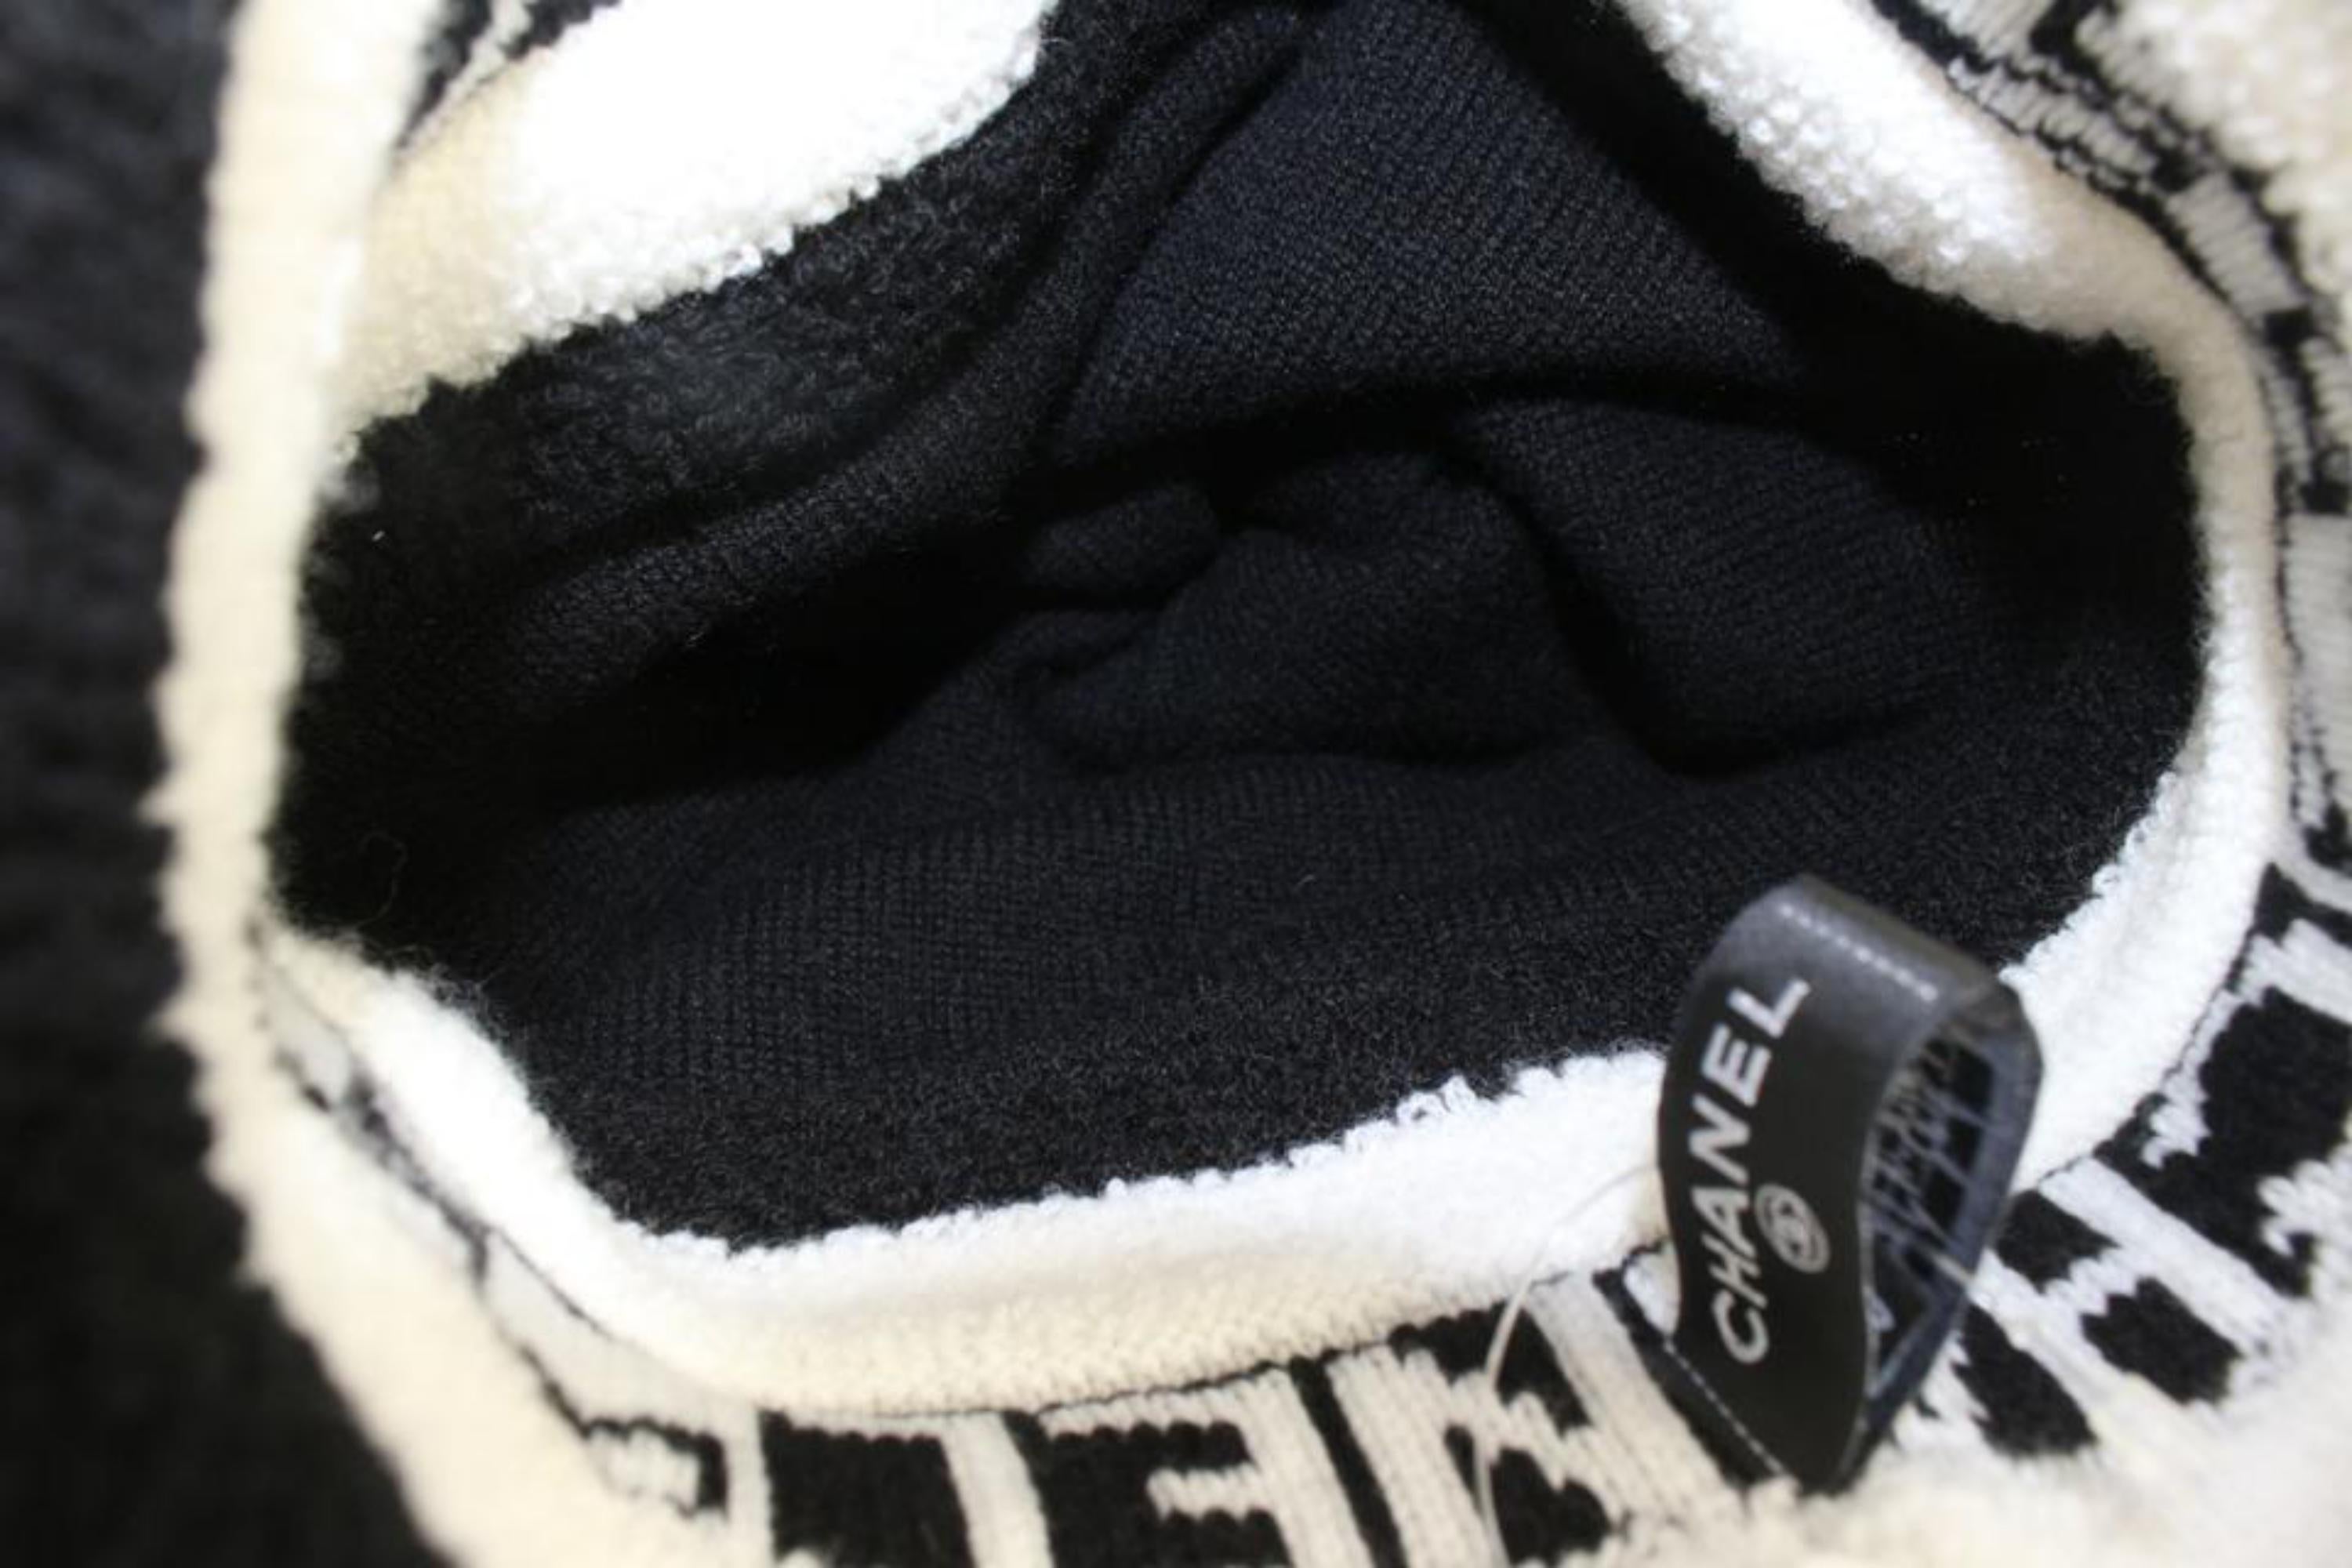 Chanel Black x White Cashmere Pom Pom Beanie Skull Cap Ski Hat 1213c5 4